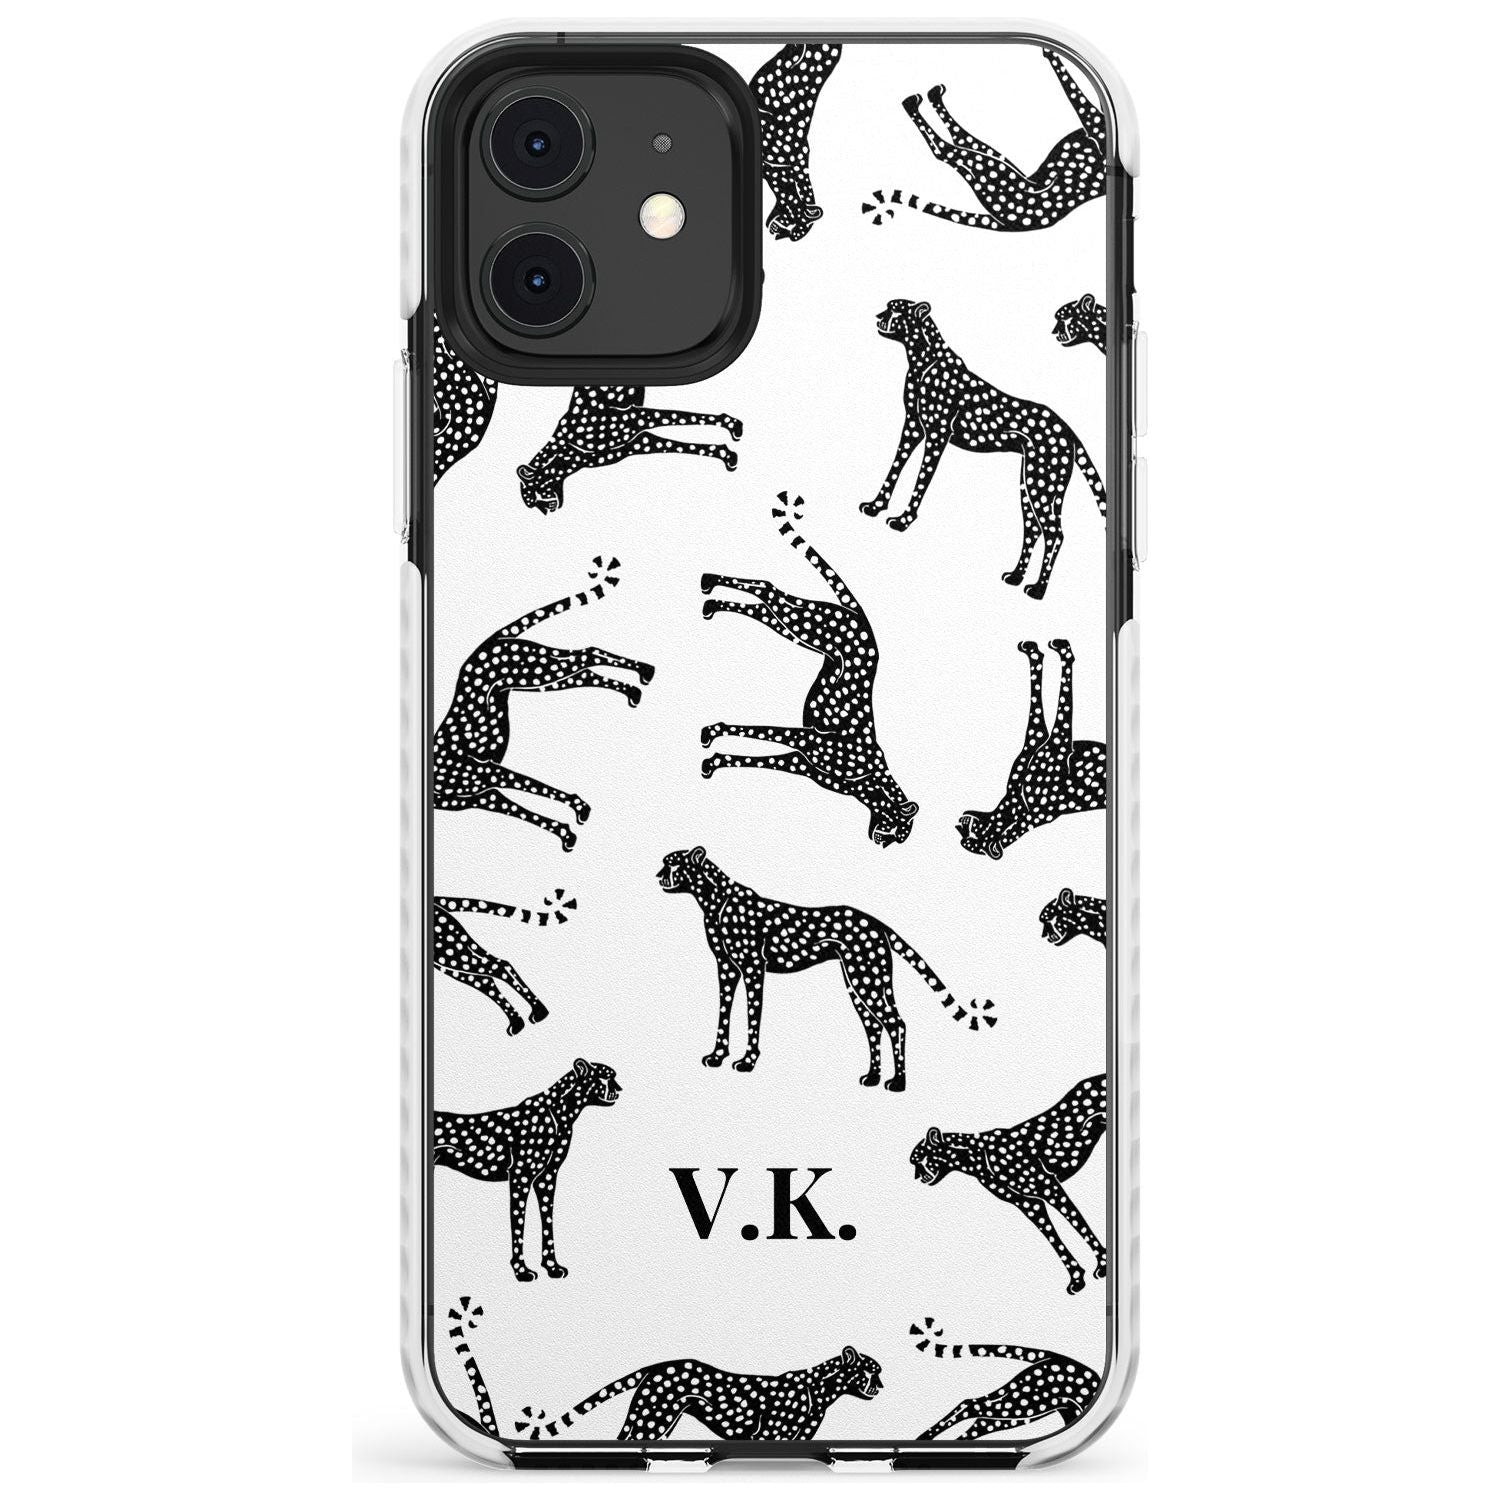 Personalised Cheetah Pattern: Black & White Slim TPU Phone Case for iPhone 11